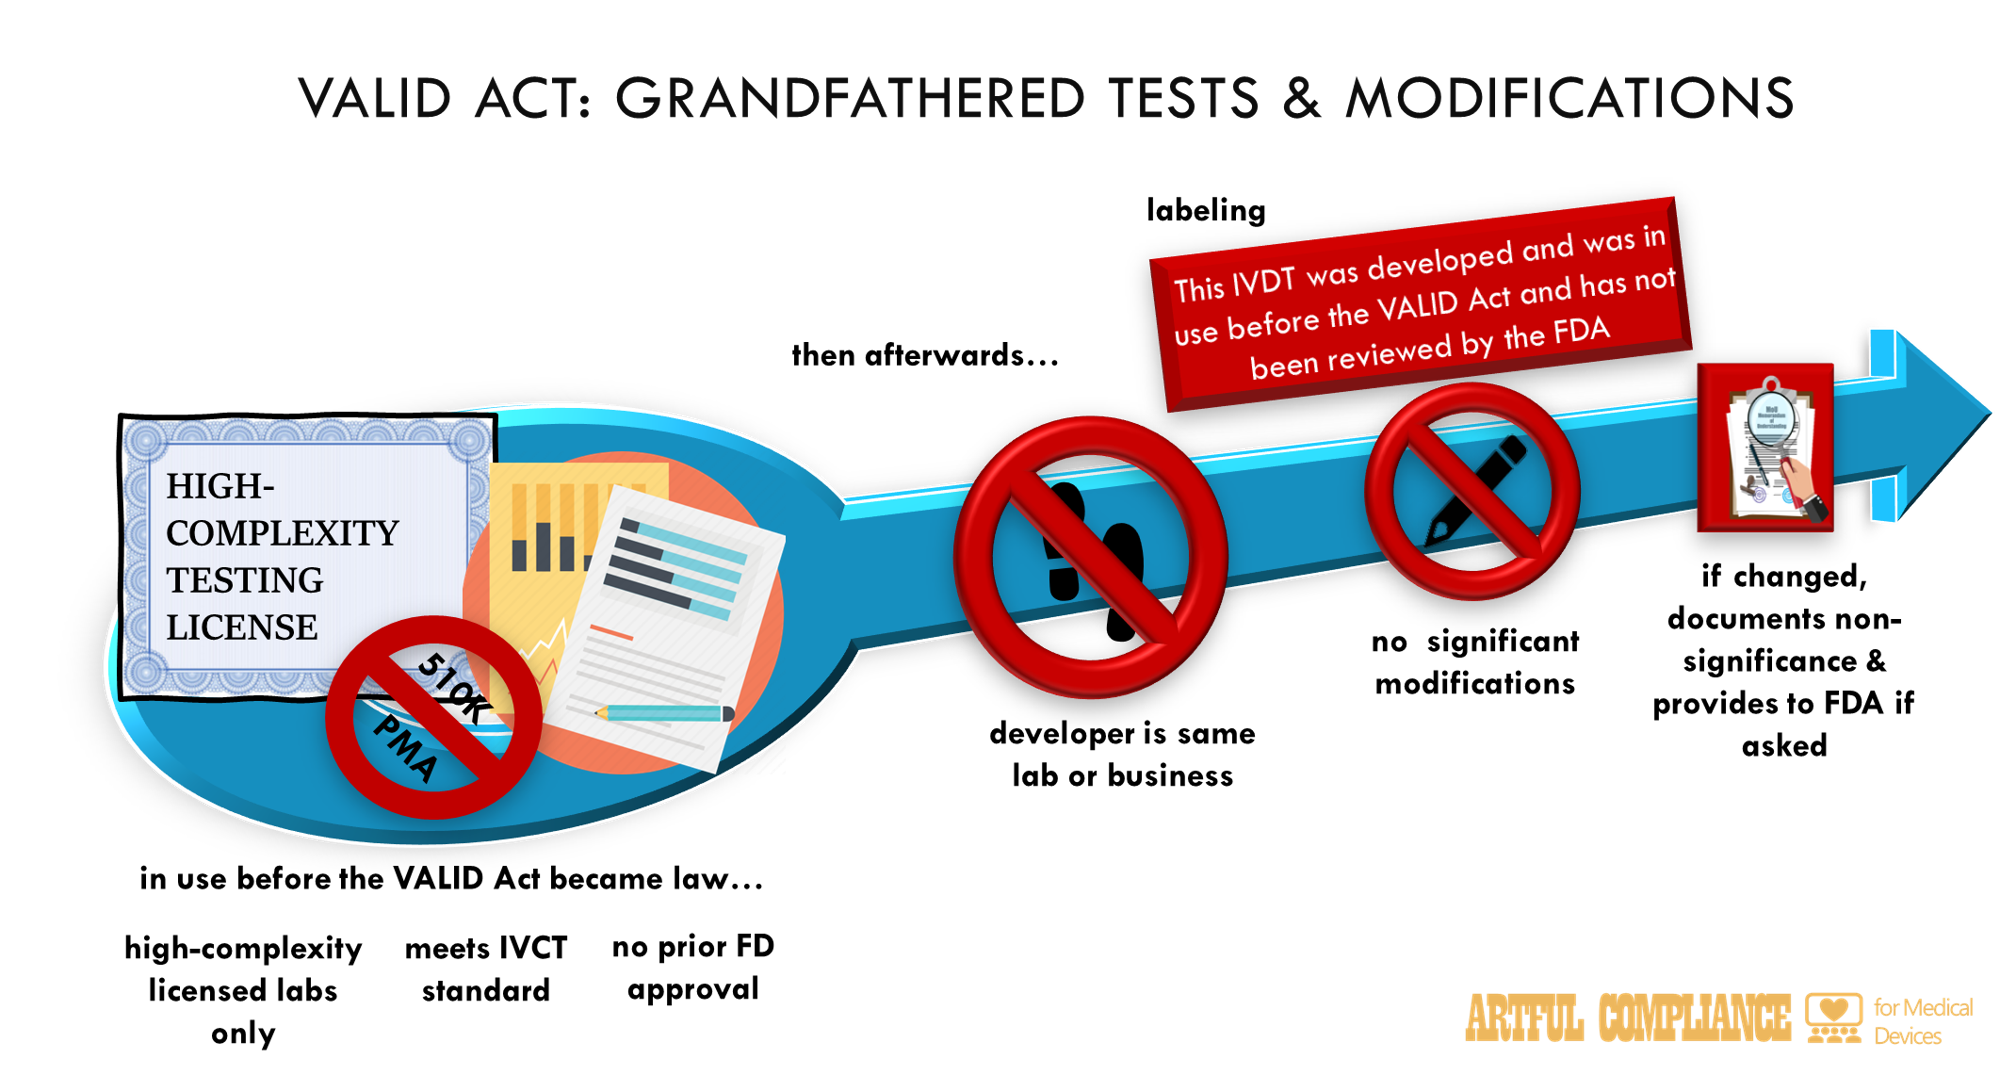 00061 VALID Act Grandfathered Tests